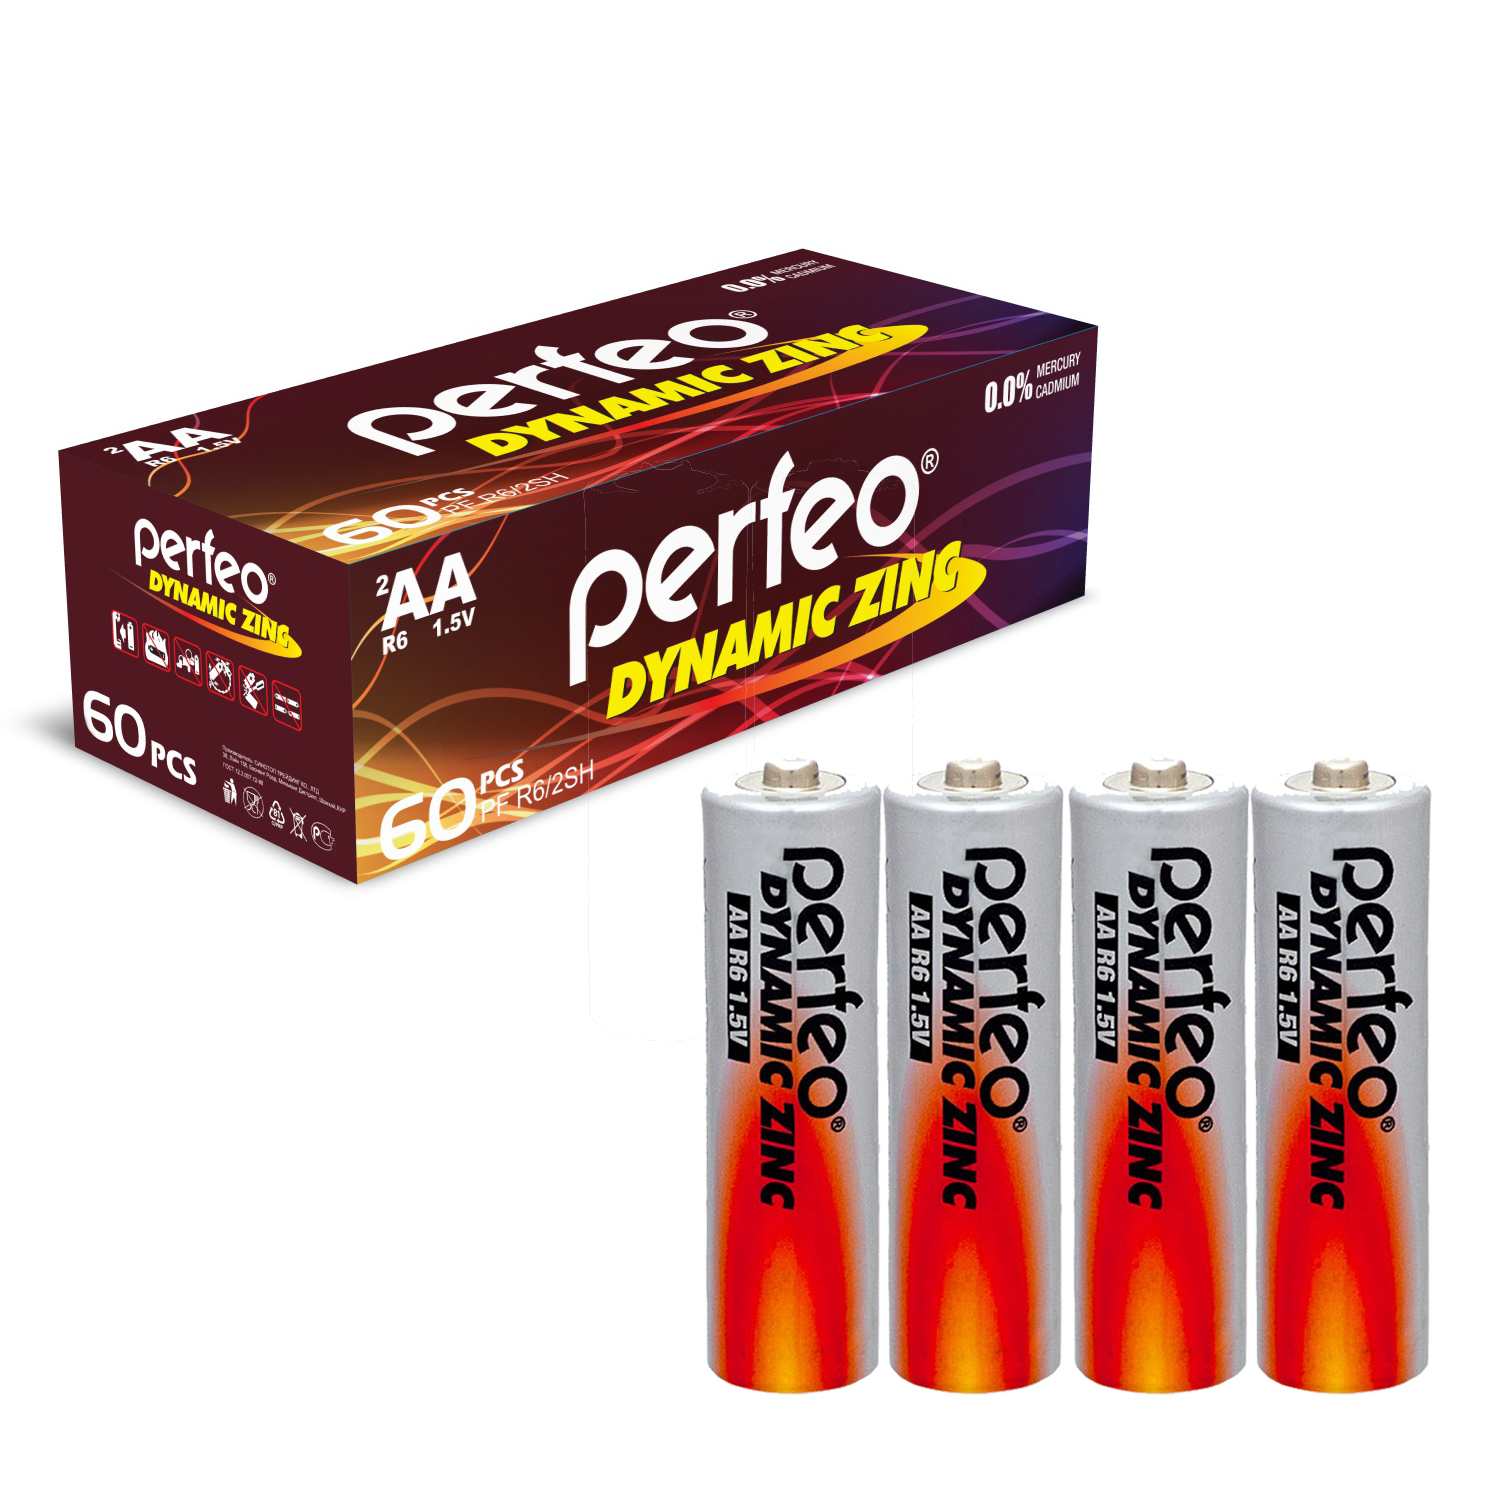 Батарейка Perfeo R6/4SH Dynamic Zinc 60 шт perfeo pf